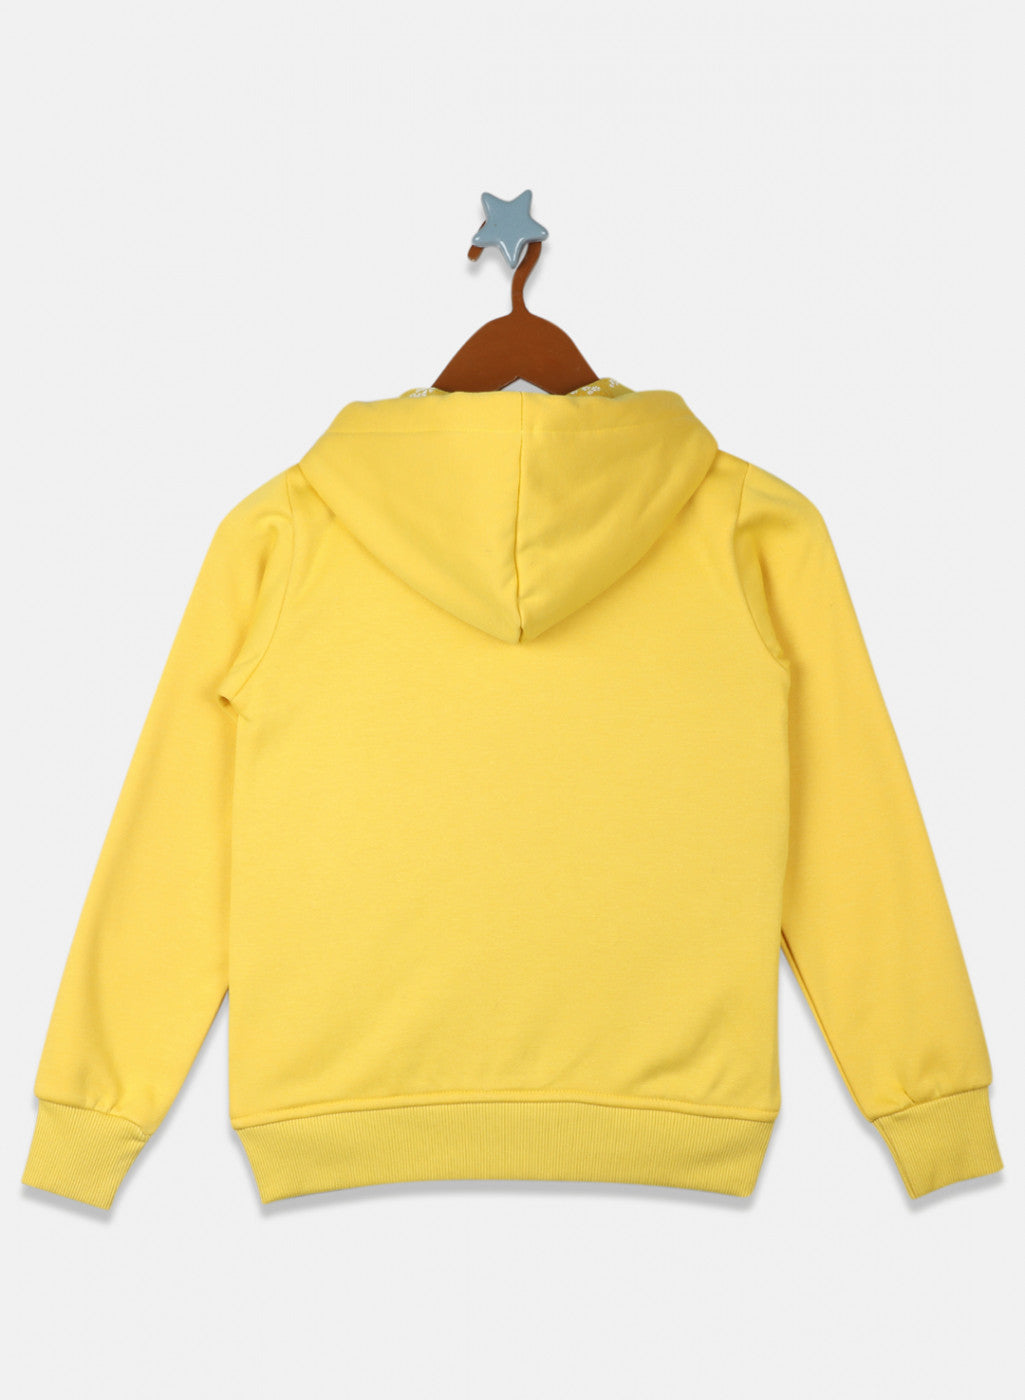 Girls Yellow Embroidered Sweatshirt